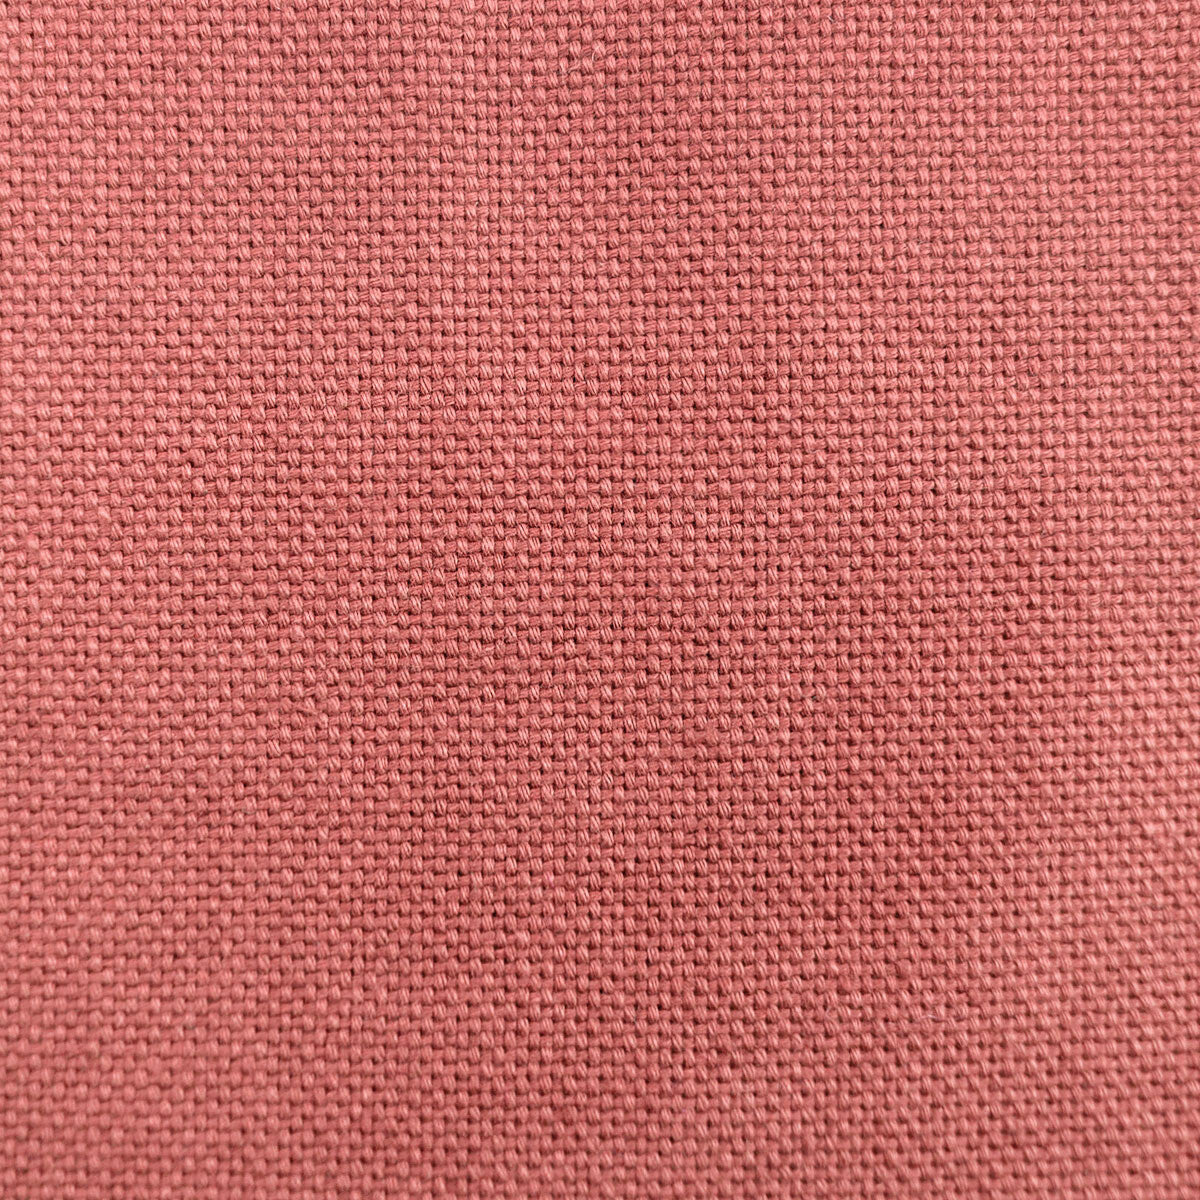 Dobra fabric in rosa viejo color - pattern LCT1075.013.0 - by Gaston y Daniela in the Lorenzo Castillo VII The Rectory collection